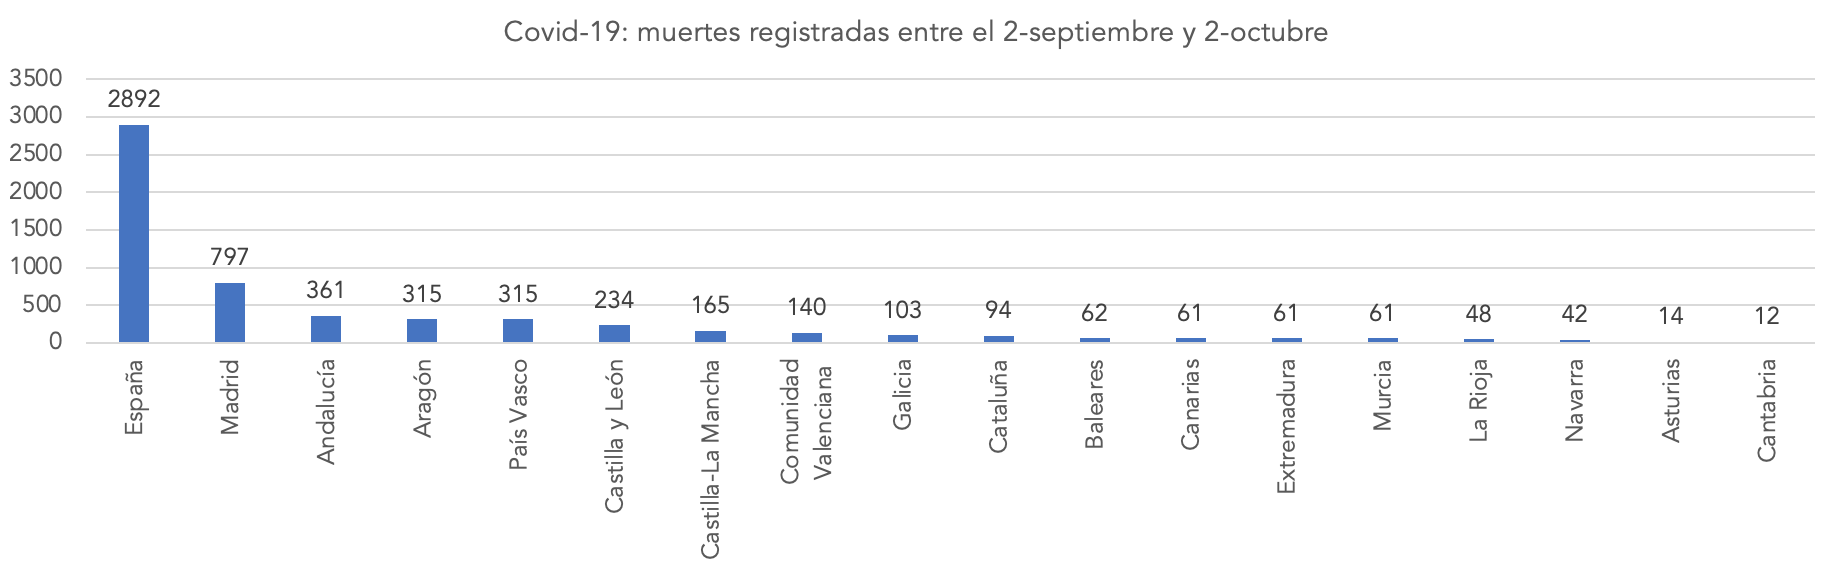 1-covid-19-muertes-segunda-ola-coronavirus-espana-septiembre-2020-por-ccaa.png